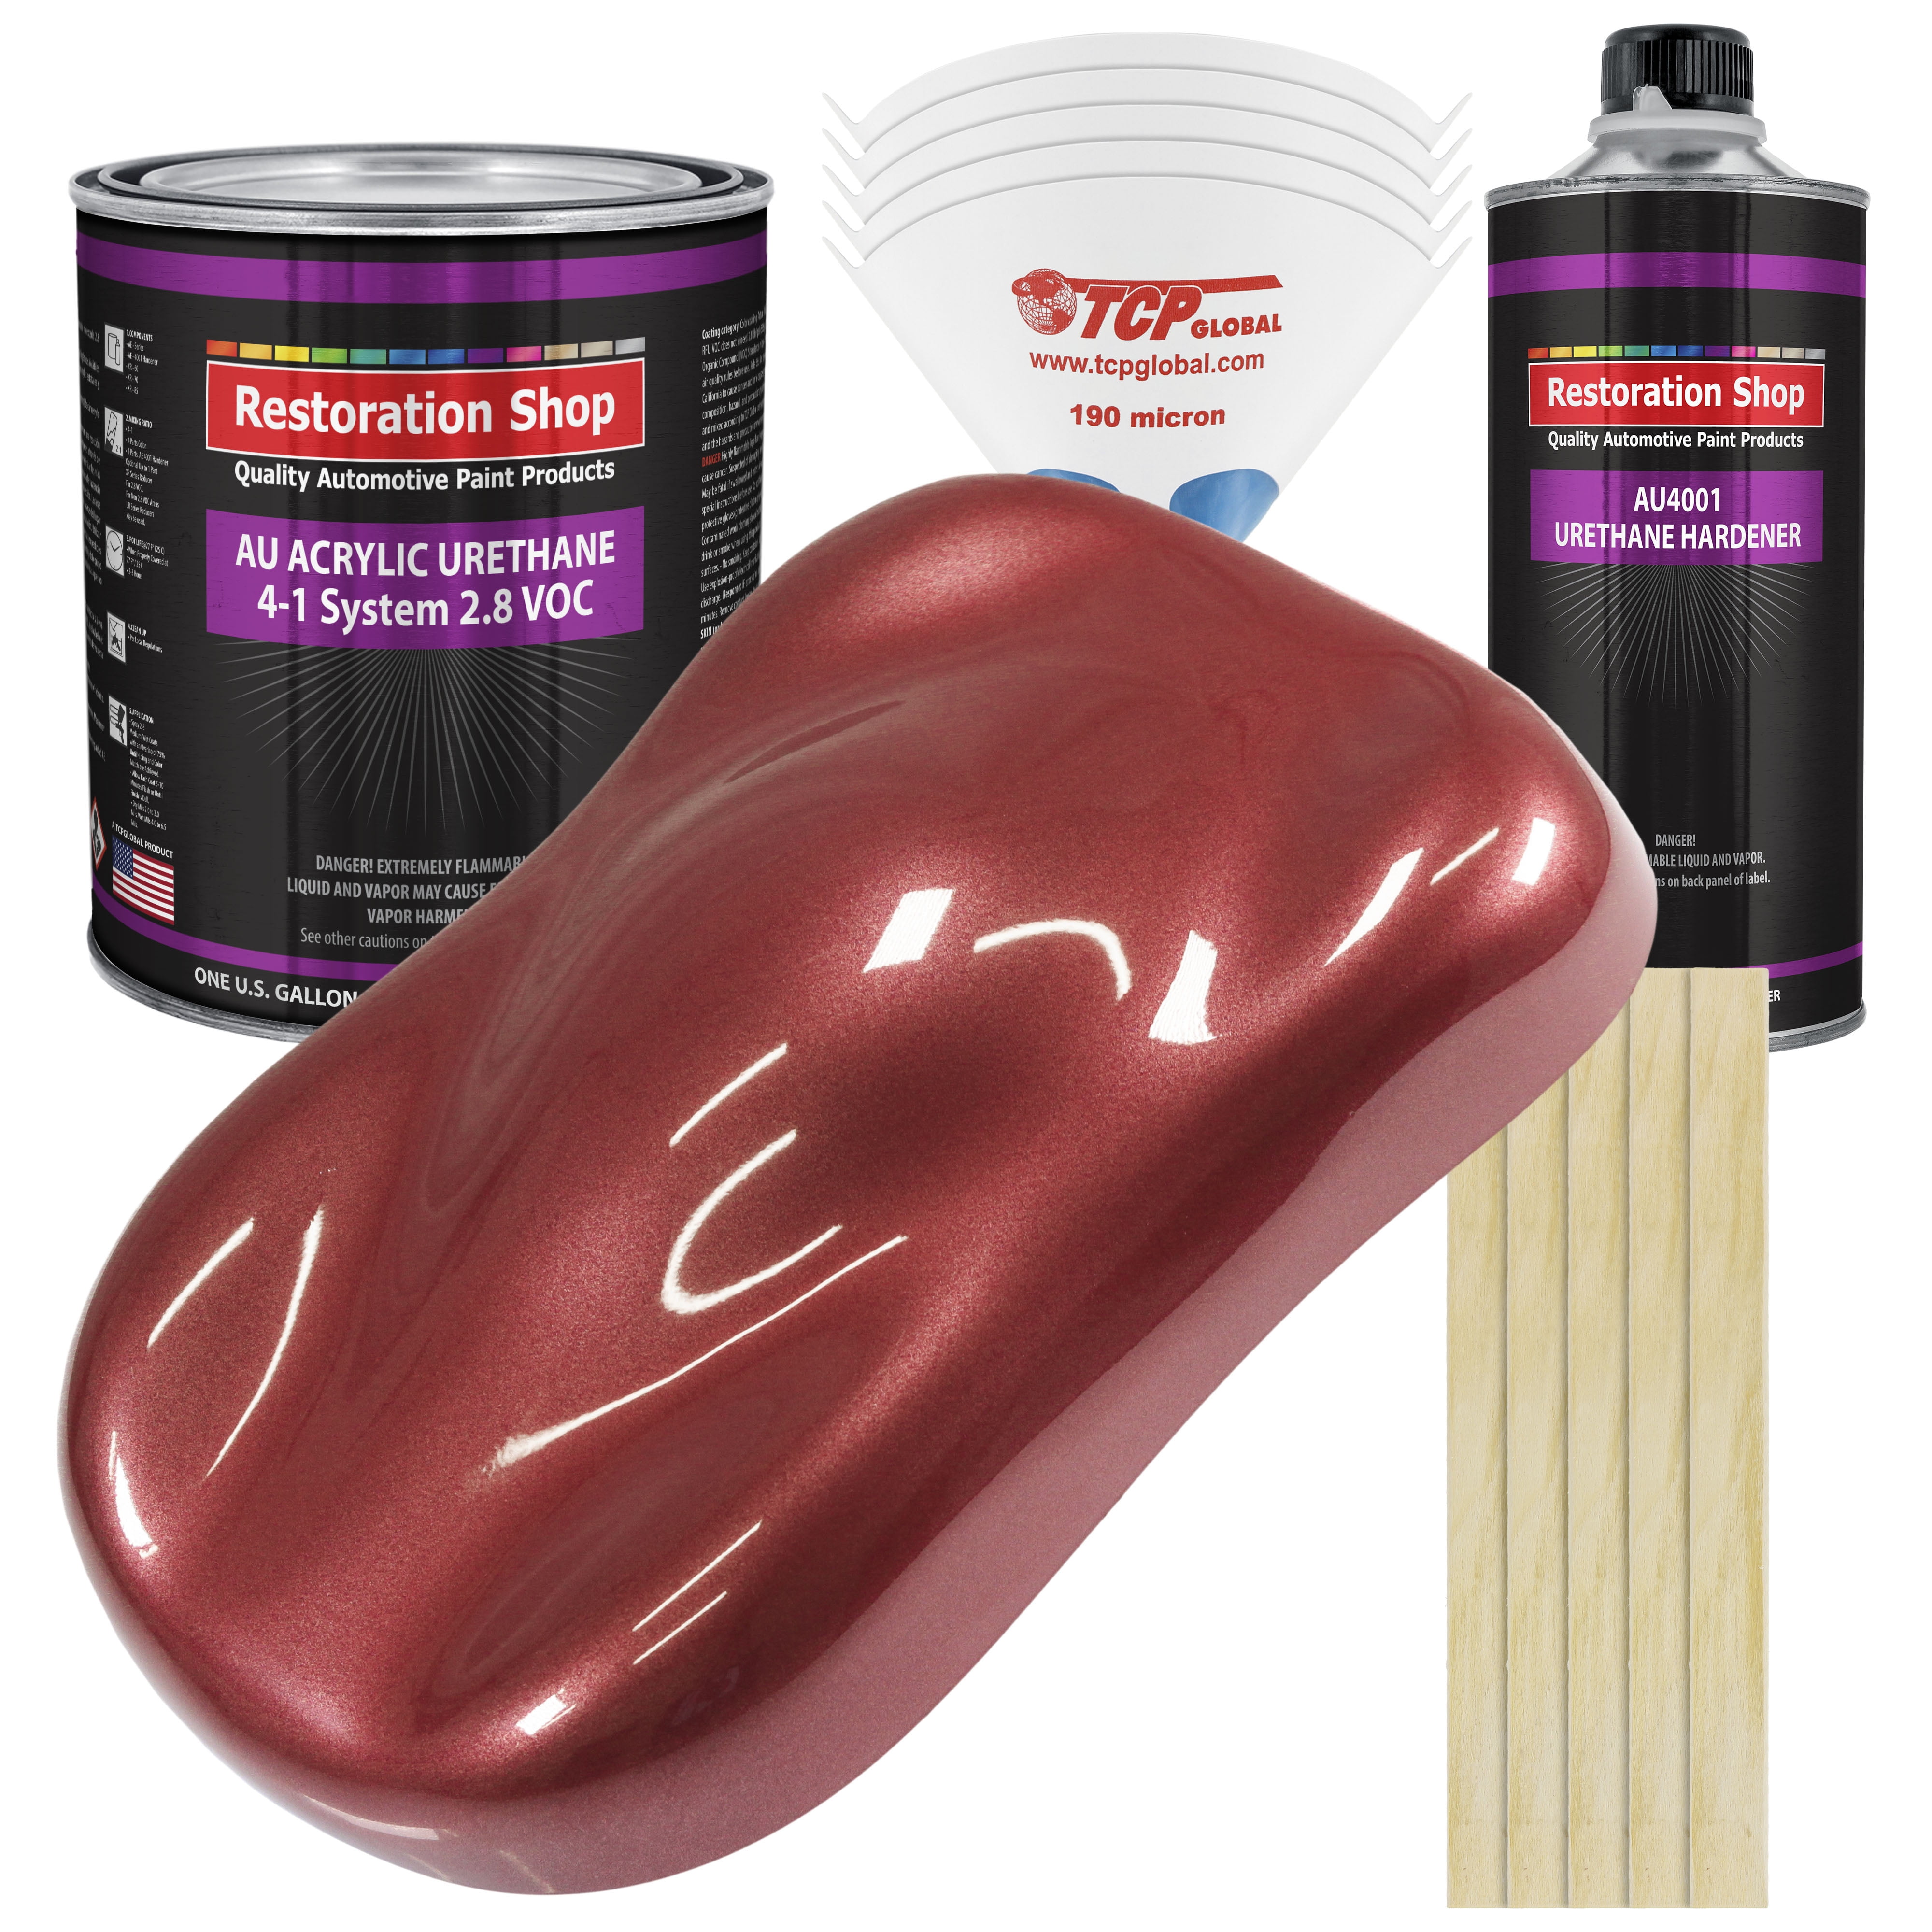 Restoration Shop Candy Apple Red Metallic Acrylic Urethane Auto Paint